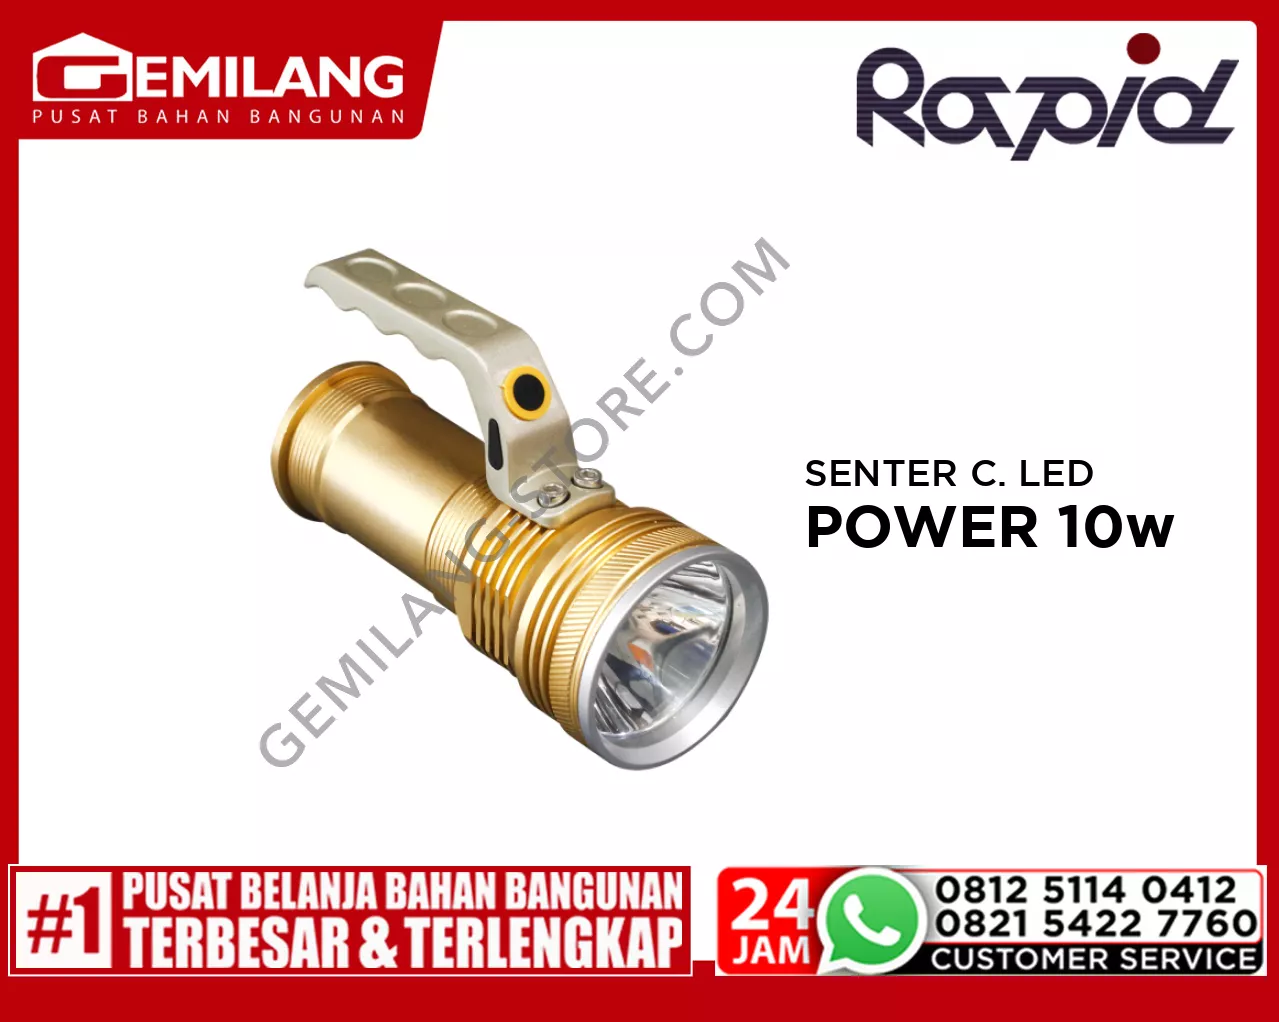 RAPID SENTER CHARGER LED POWER 10w R1110-G